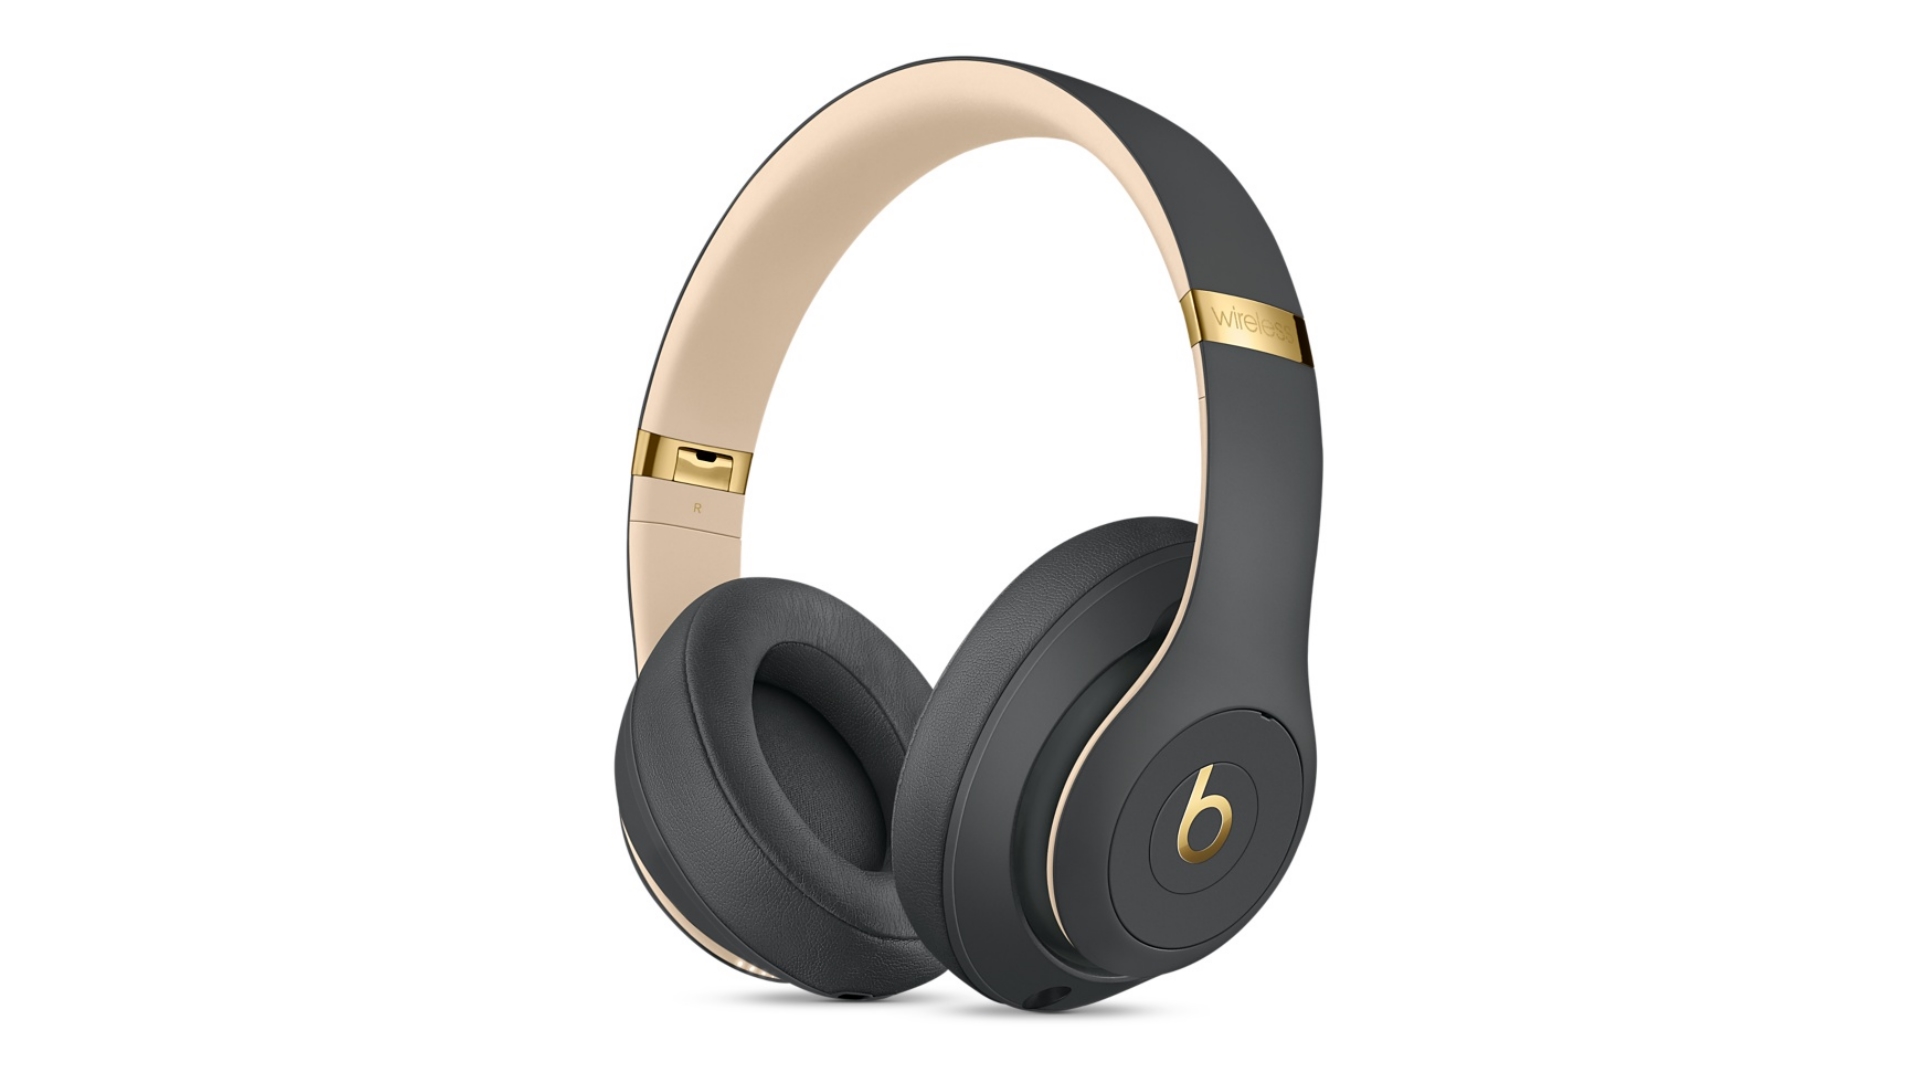 The Beats Studio 3 Wireless headphones in black with gold logo